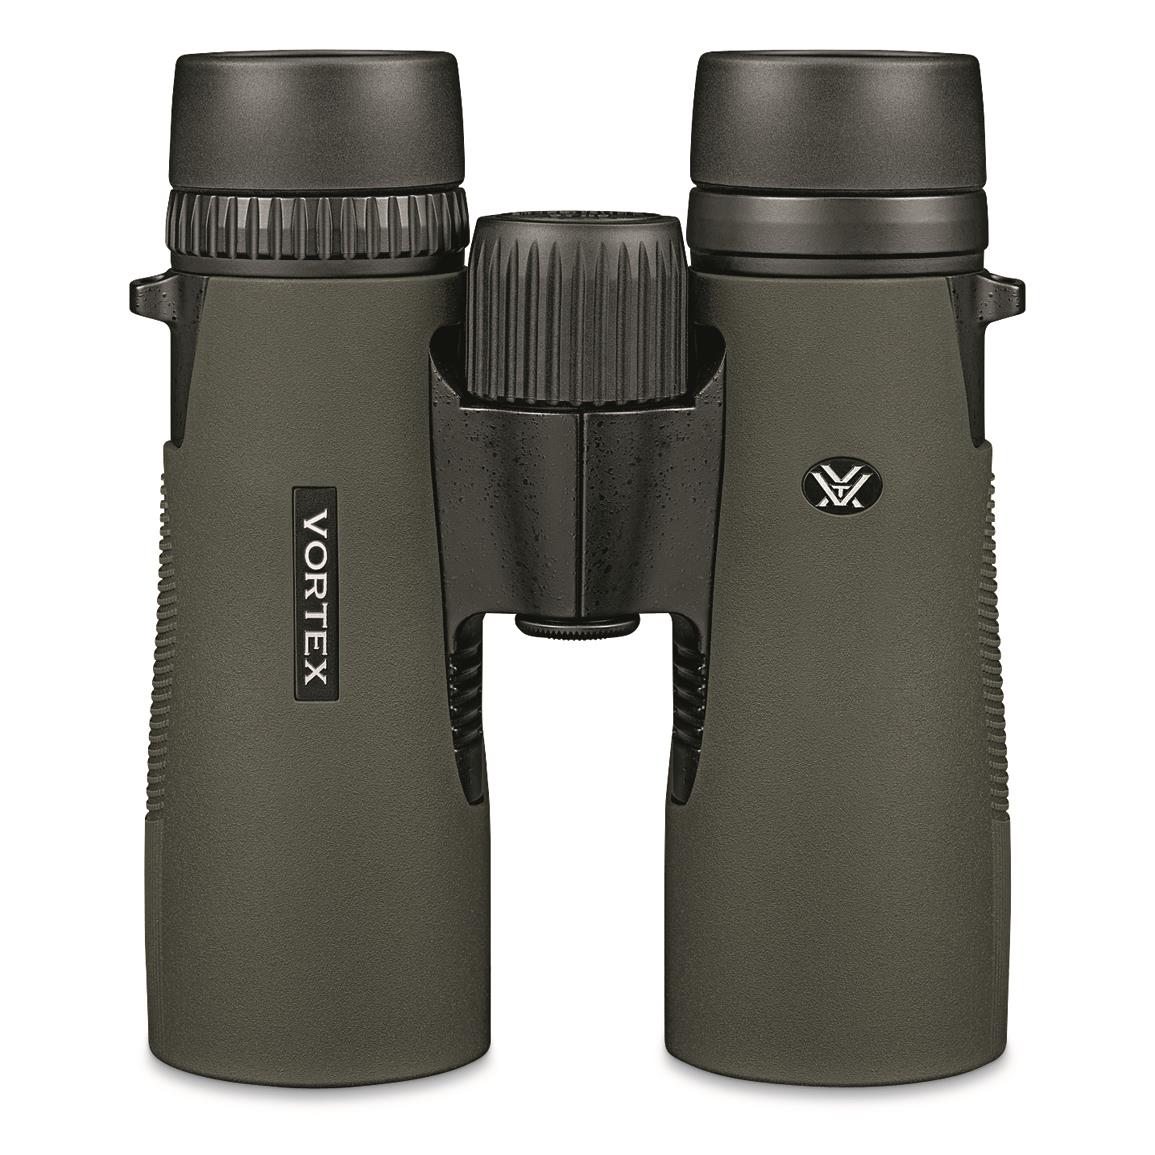 Vortex Diamondback HD 10x42mm Binoculars